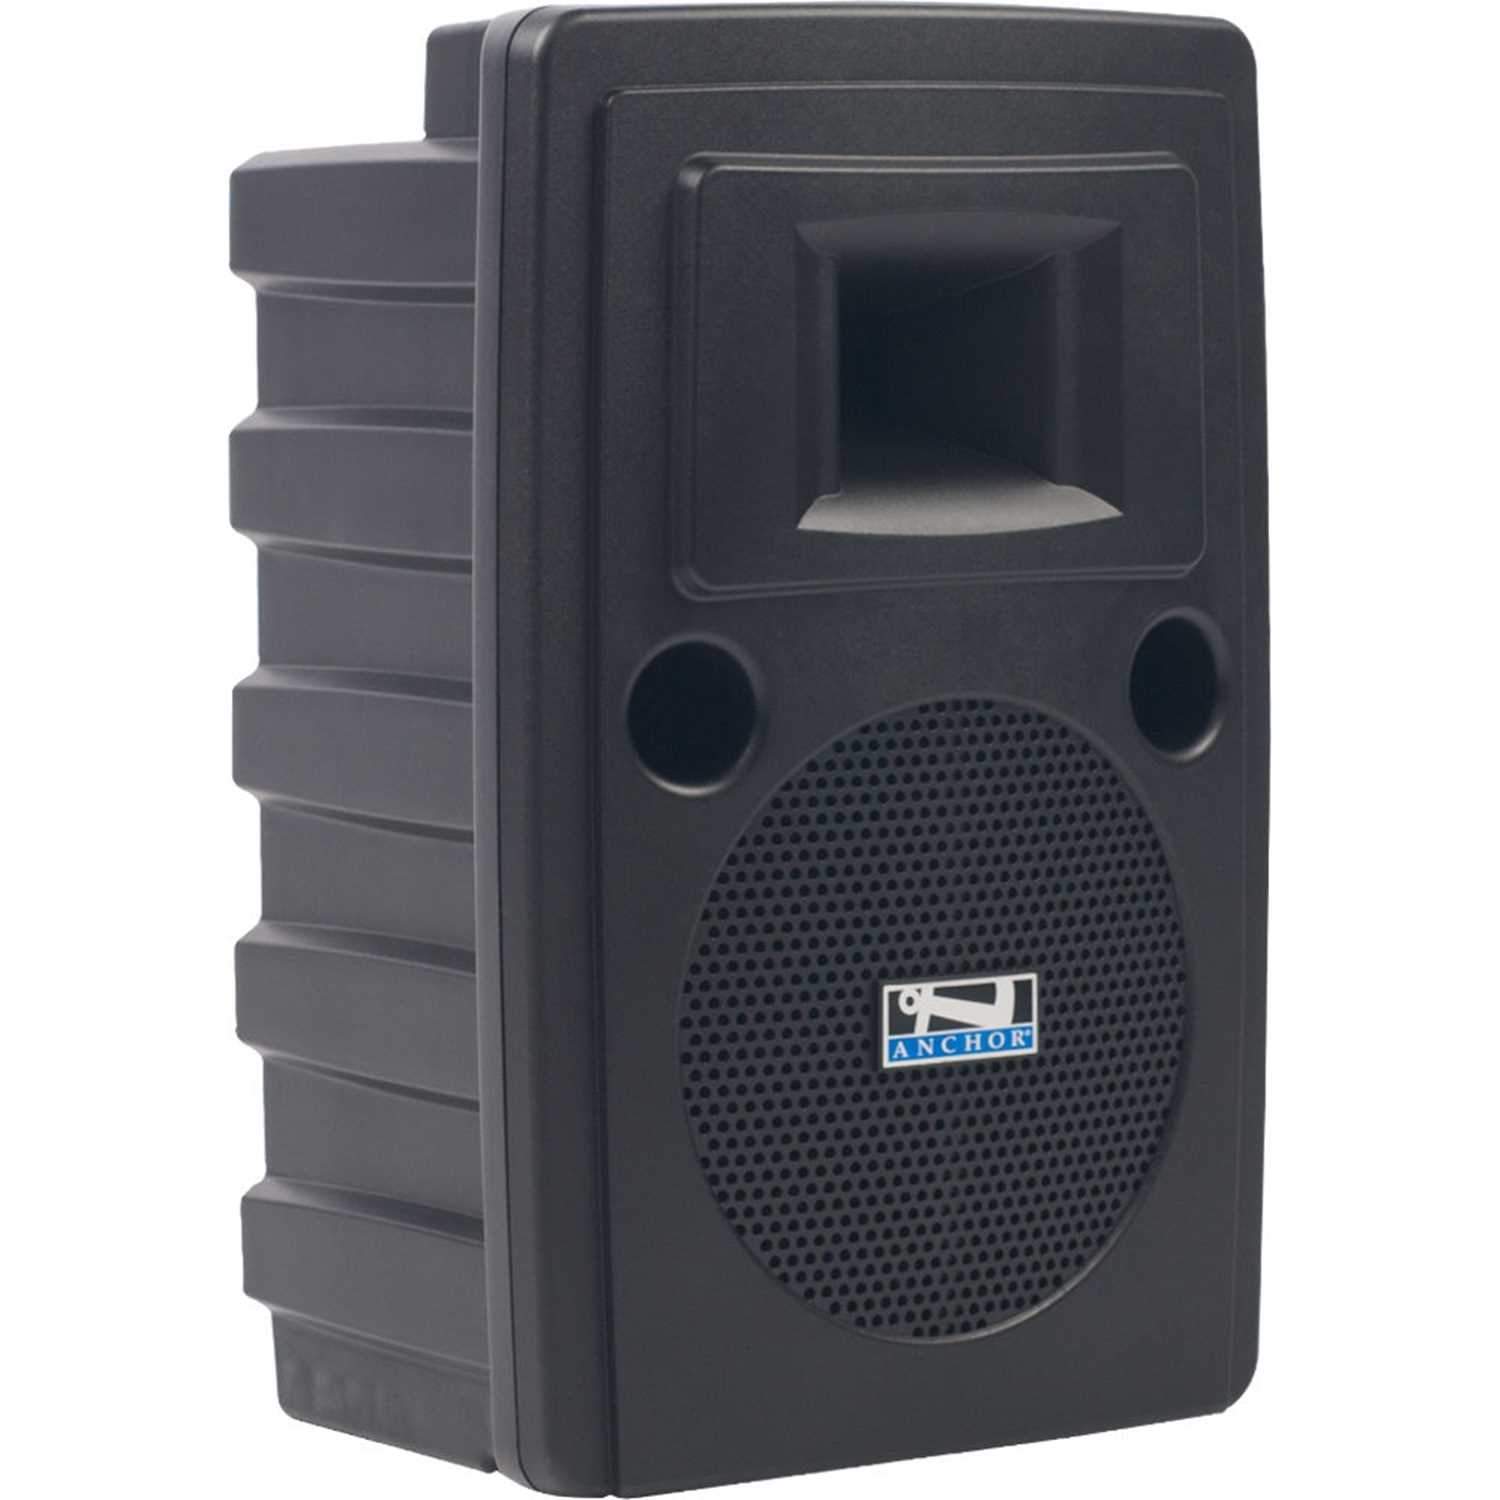 Anchor Audio LIB-8000CU1 Liberty Platinum Powered Speaker System - PSSL ProSound and Stage Lighting